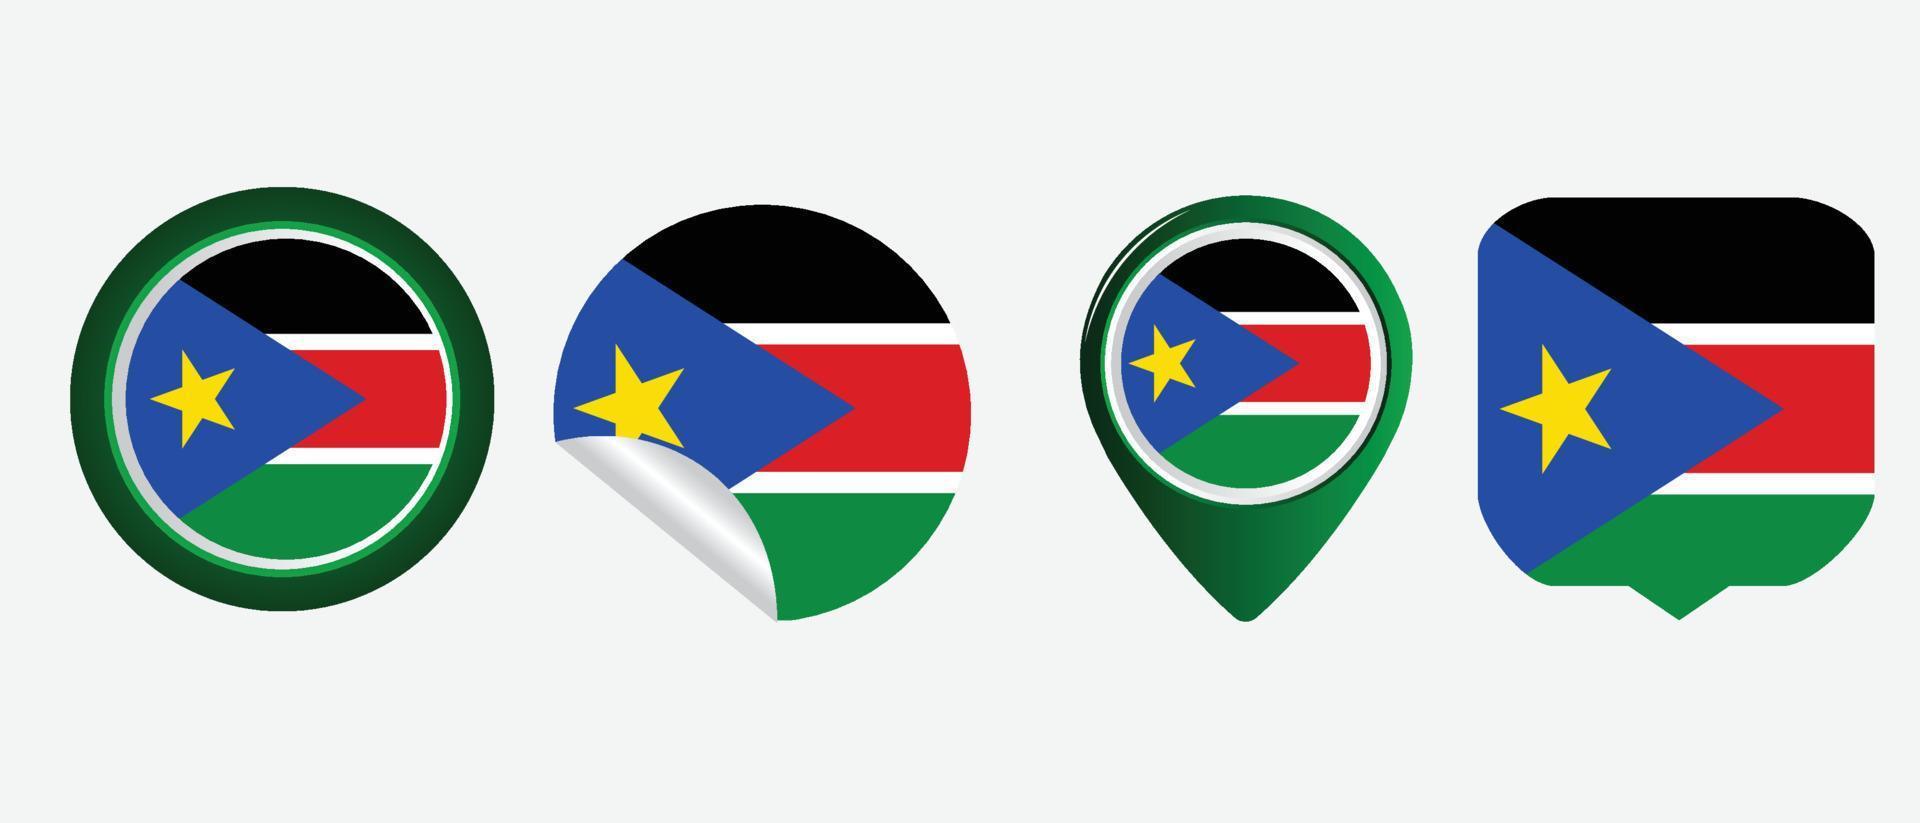 south sudan flag. flat icon symbol vector illustration